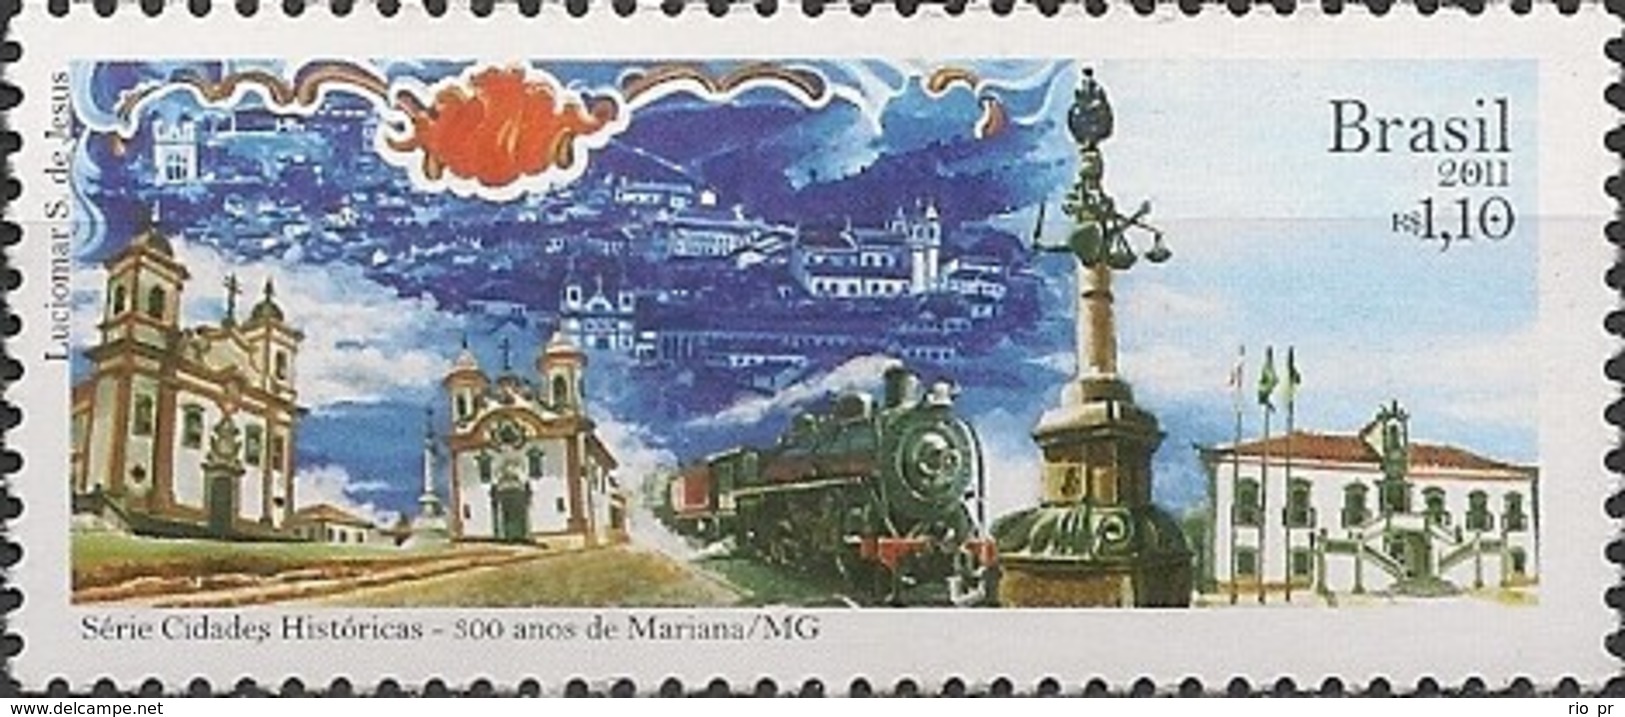 BRAZIL - HISTORICAL TOWNS SERIES, 300 YEARS OF MARIANA/MG 2011 - MNH - Ungebraucht